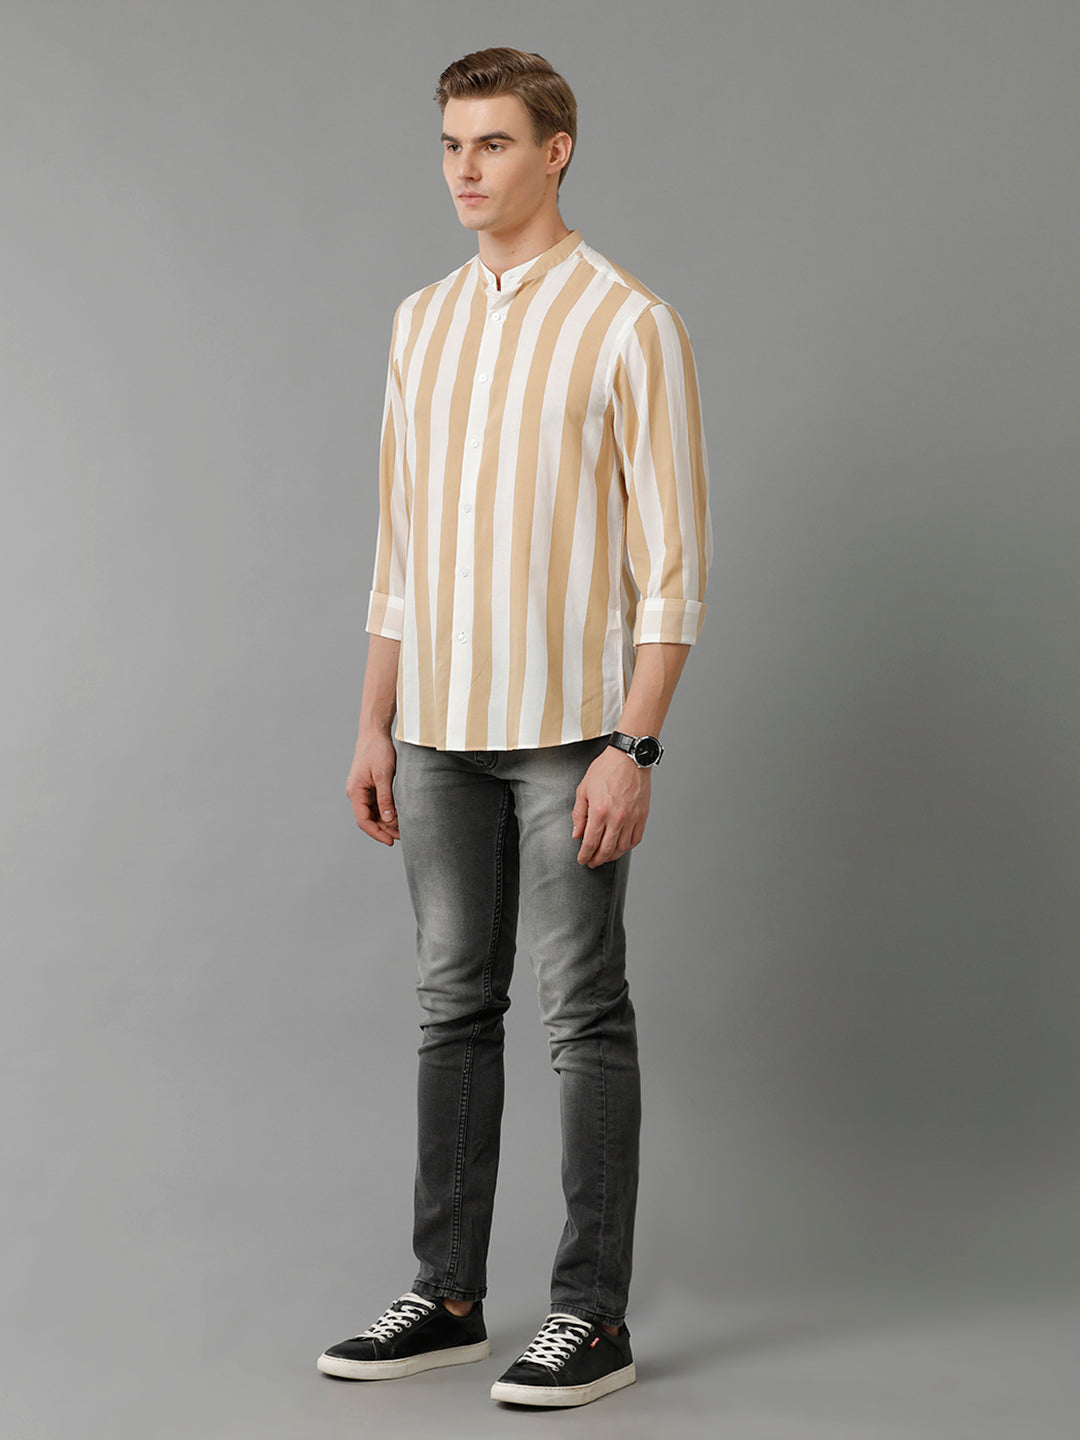 Aldeno Mens Regular Fit Vertical Stripe Brown/White Casual Cotton Modal Shirt (MATEO)